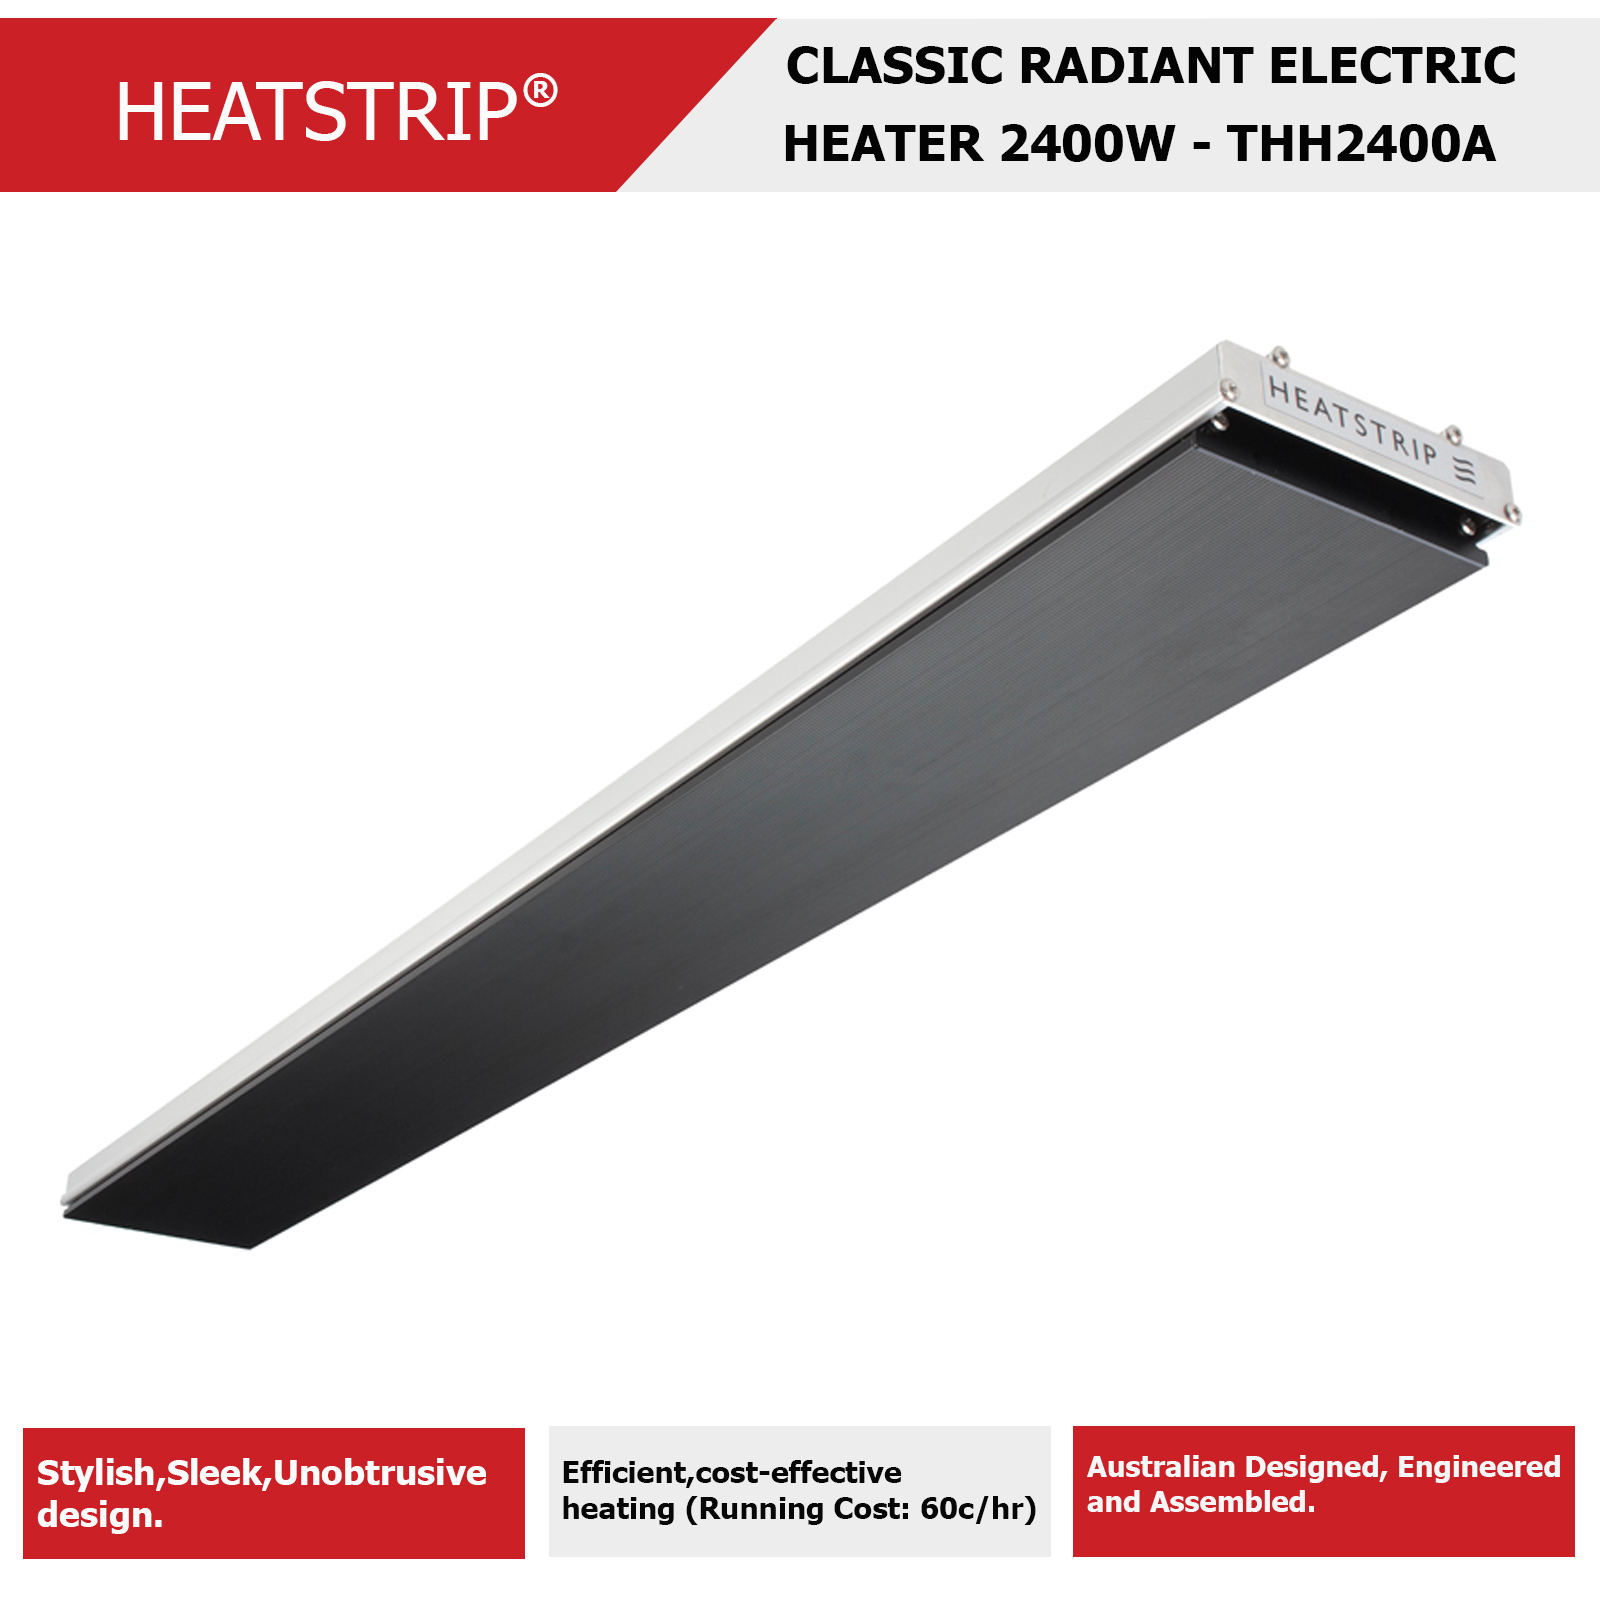 HEATSTRIP 2400W, 240V, 50Hz, 10.0A, I P55 Classic Radiant Electric Heaters - THH2400A